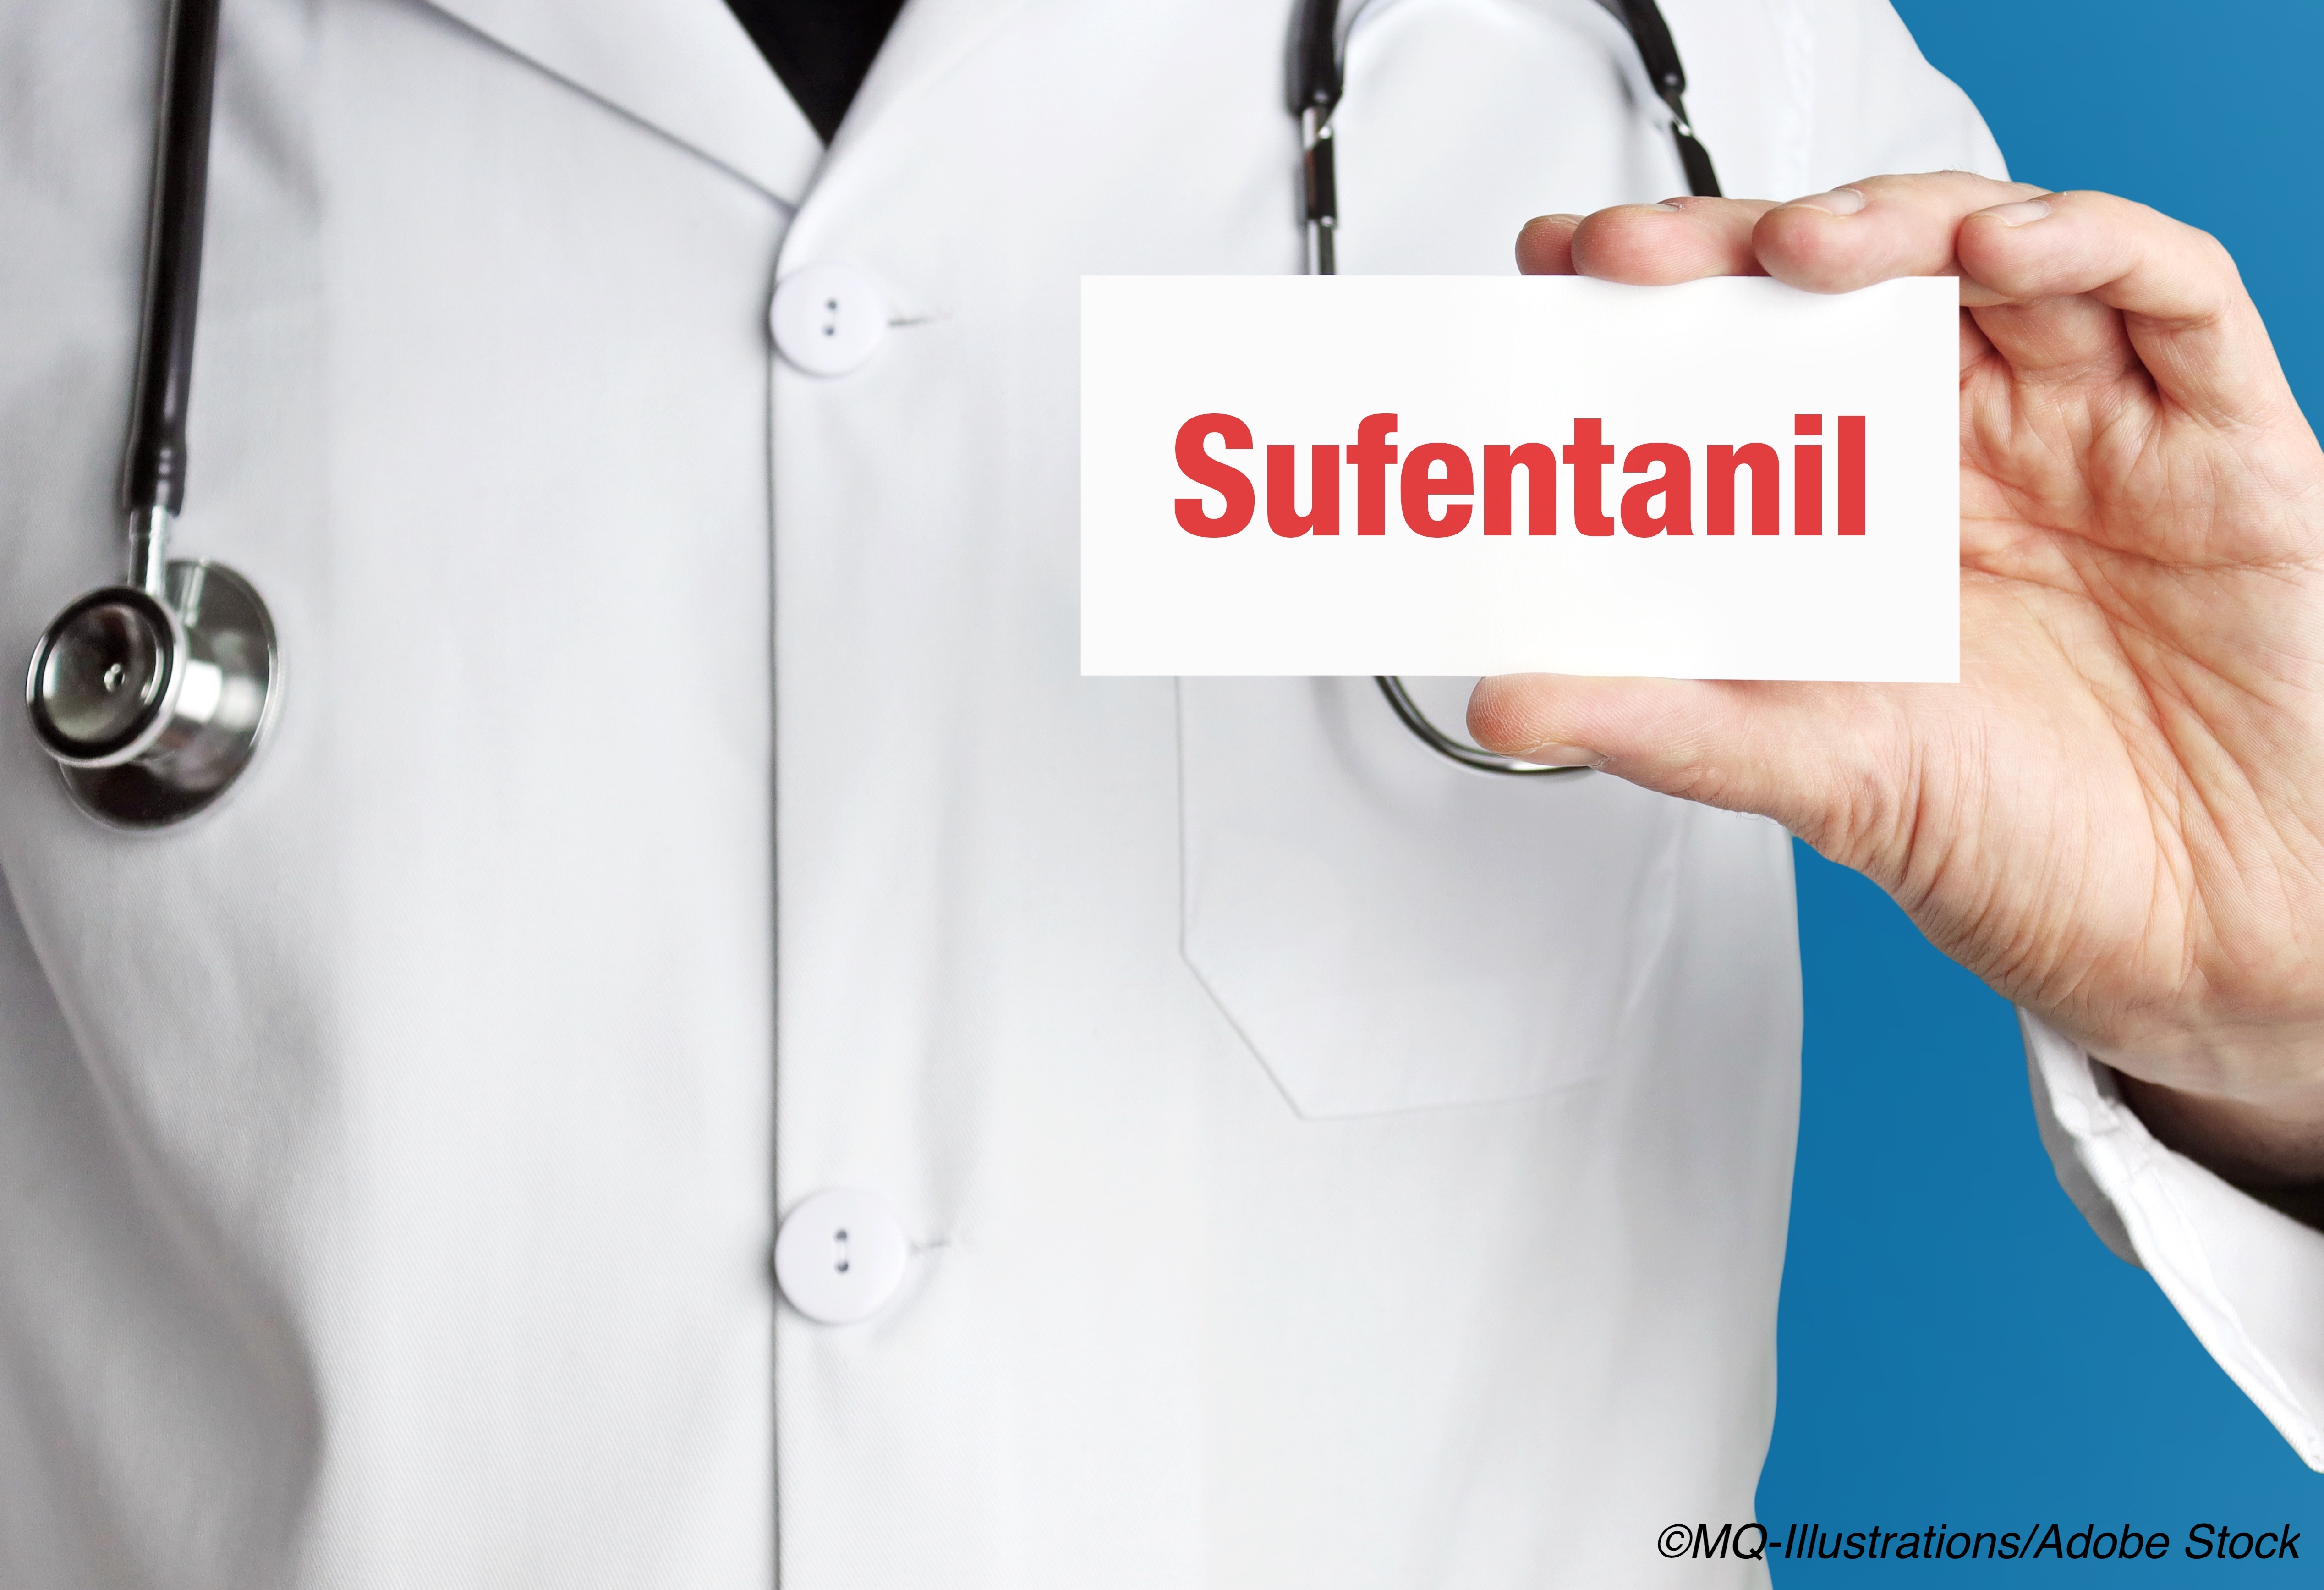 FDA Slams AcelRx for Dangerous Sufentanil Advertising